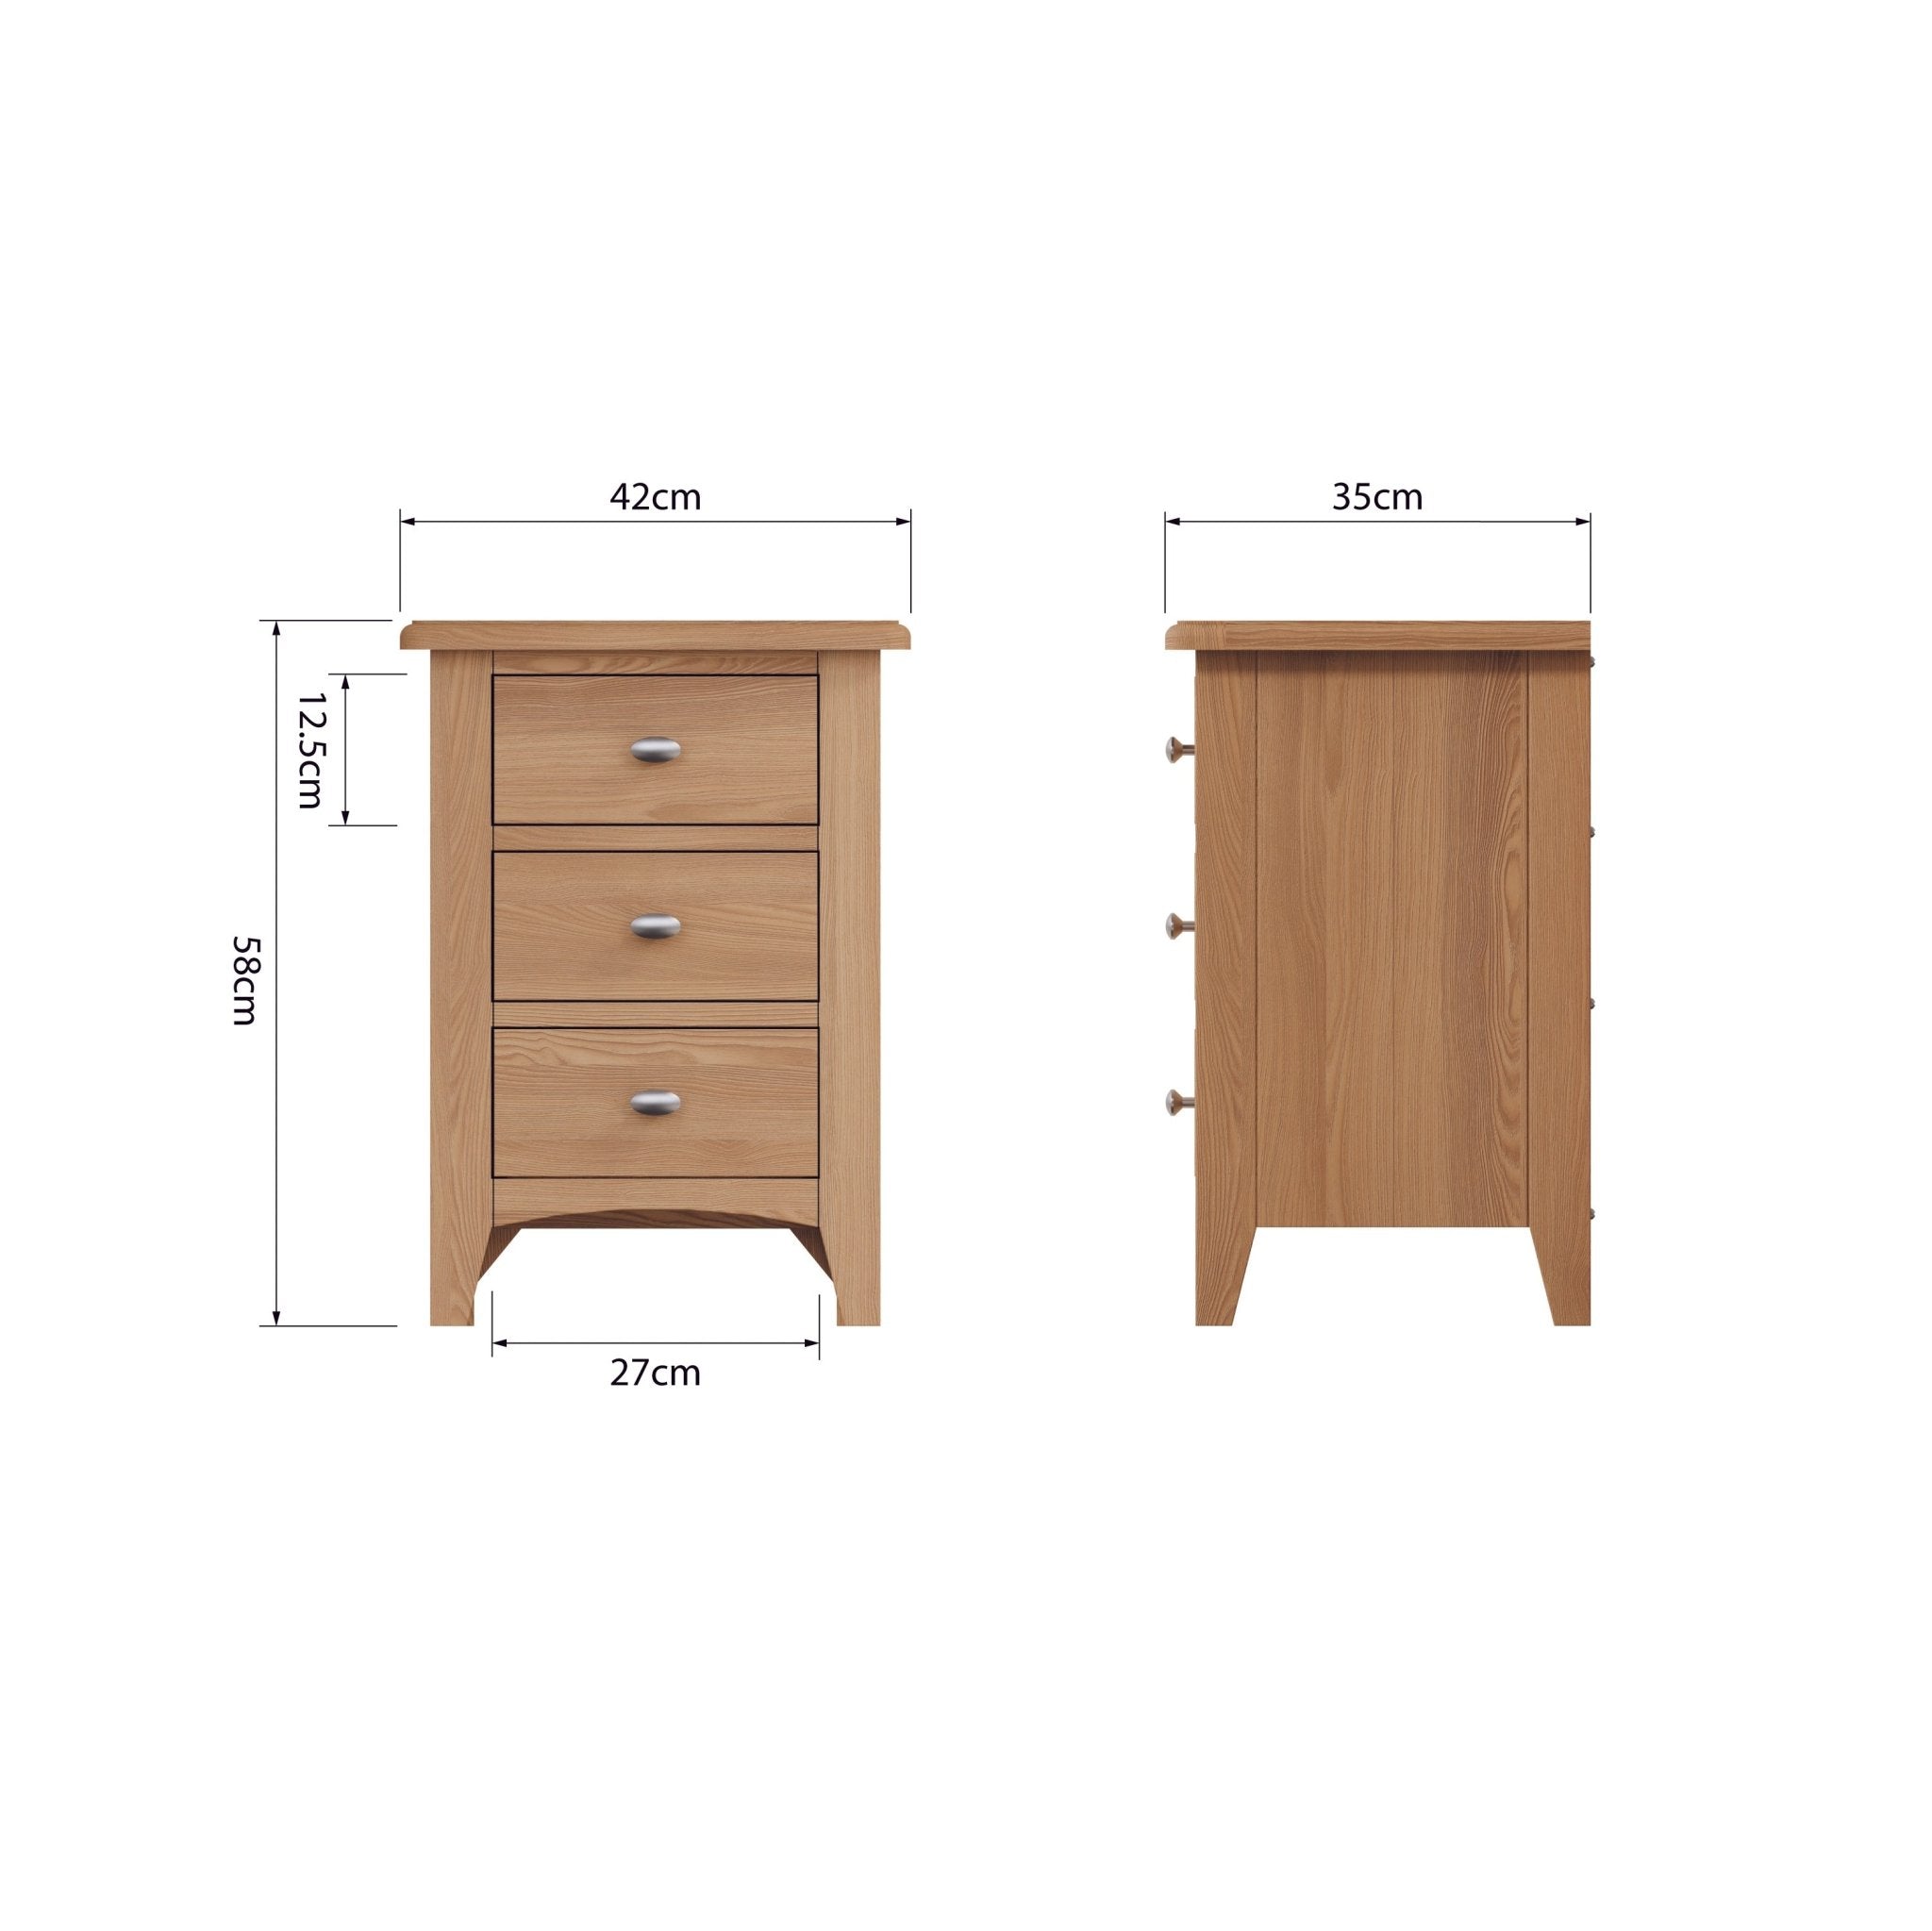 Ockley Oak 3 Drawer Bedside Cabinet - Duck Barn Interiors